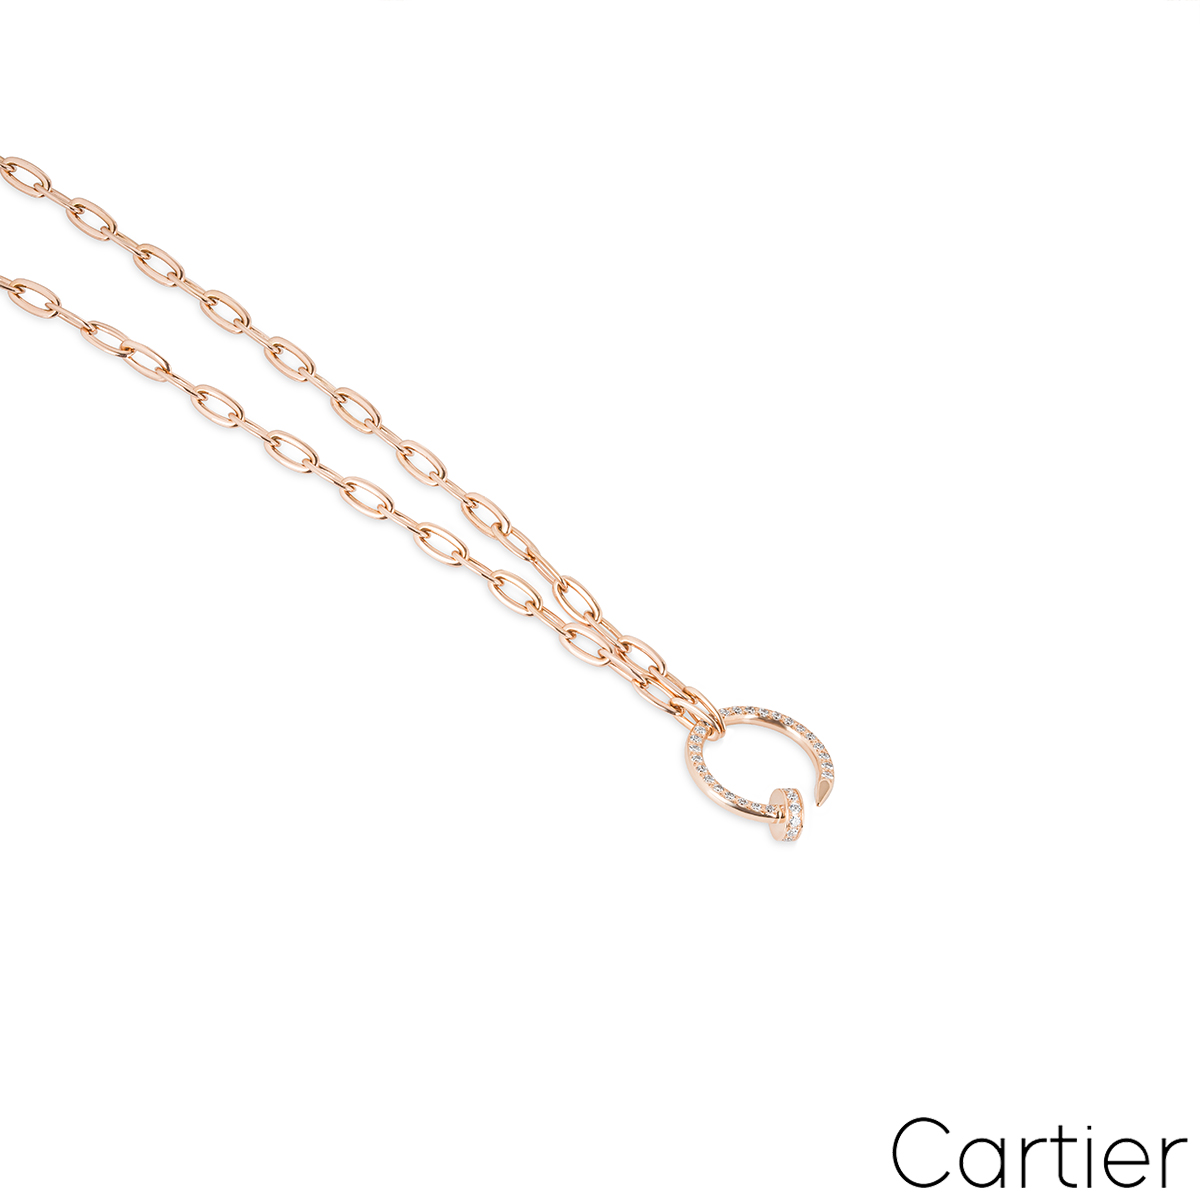 Cartier Rose Gold Diamond Juste Un Clou Necklace N7413500